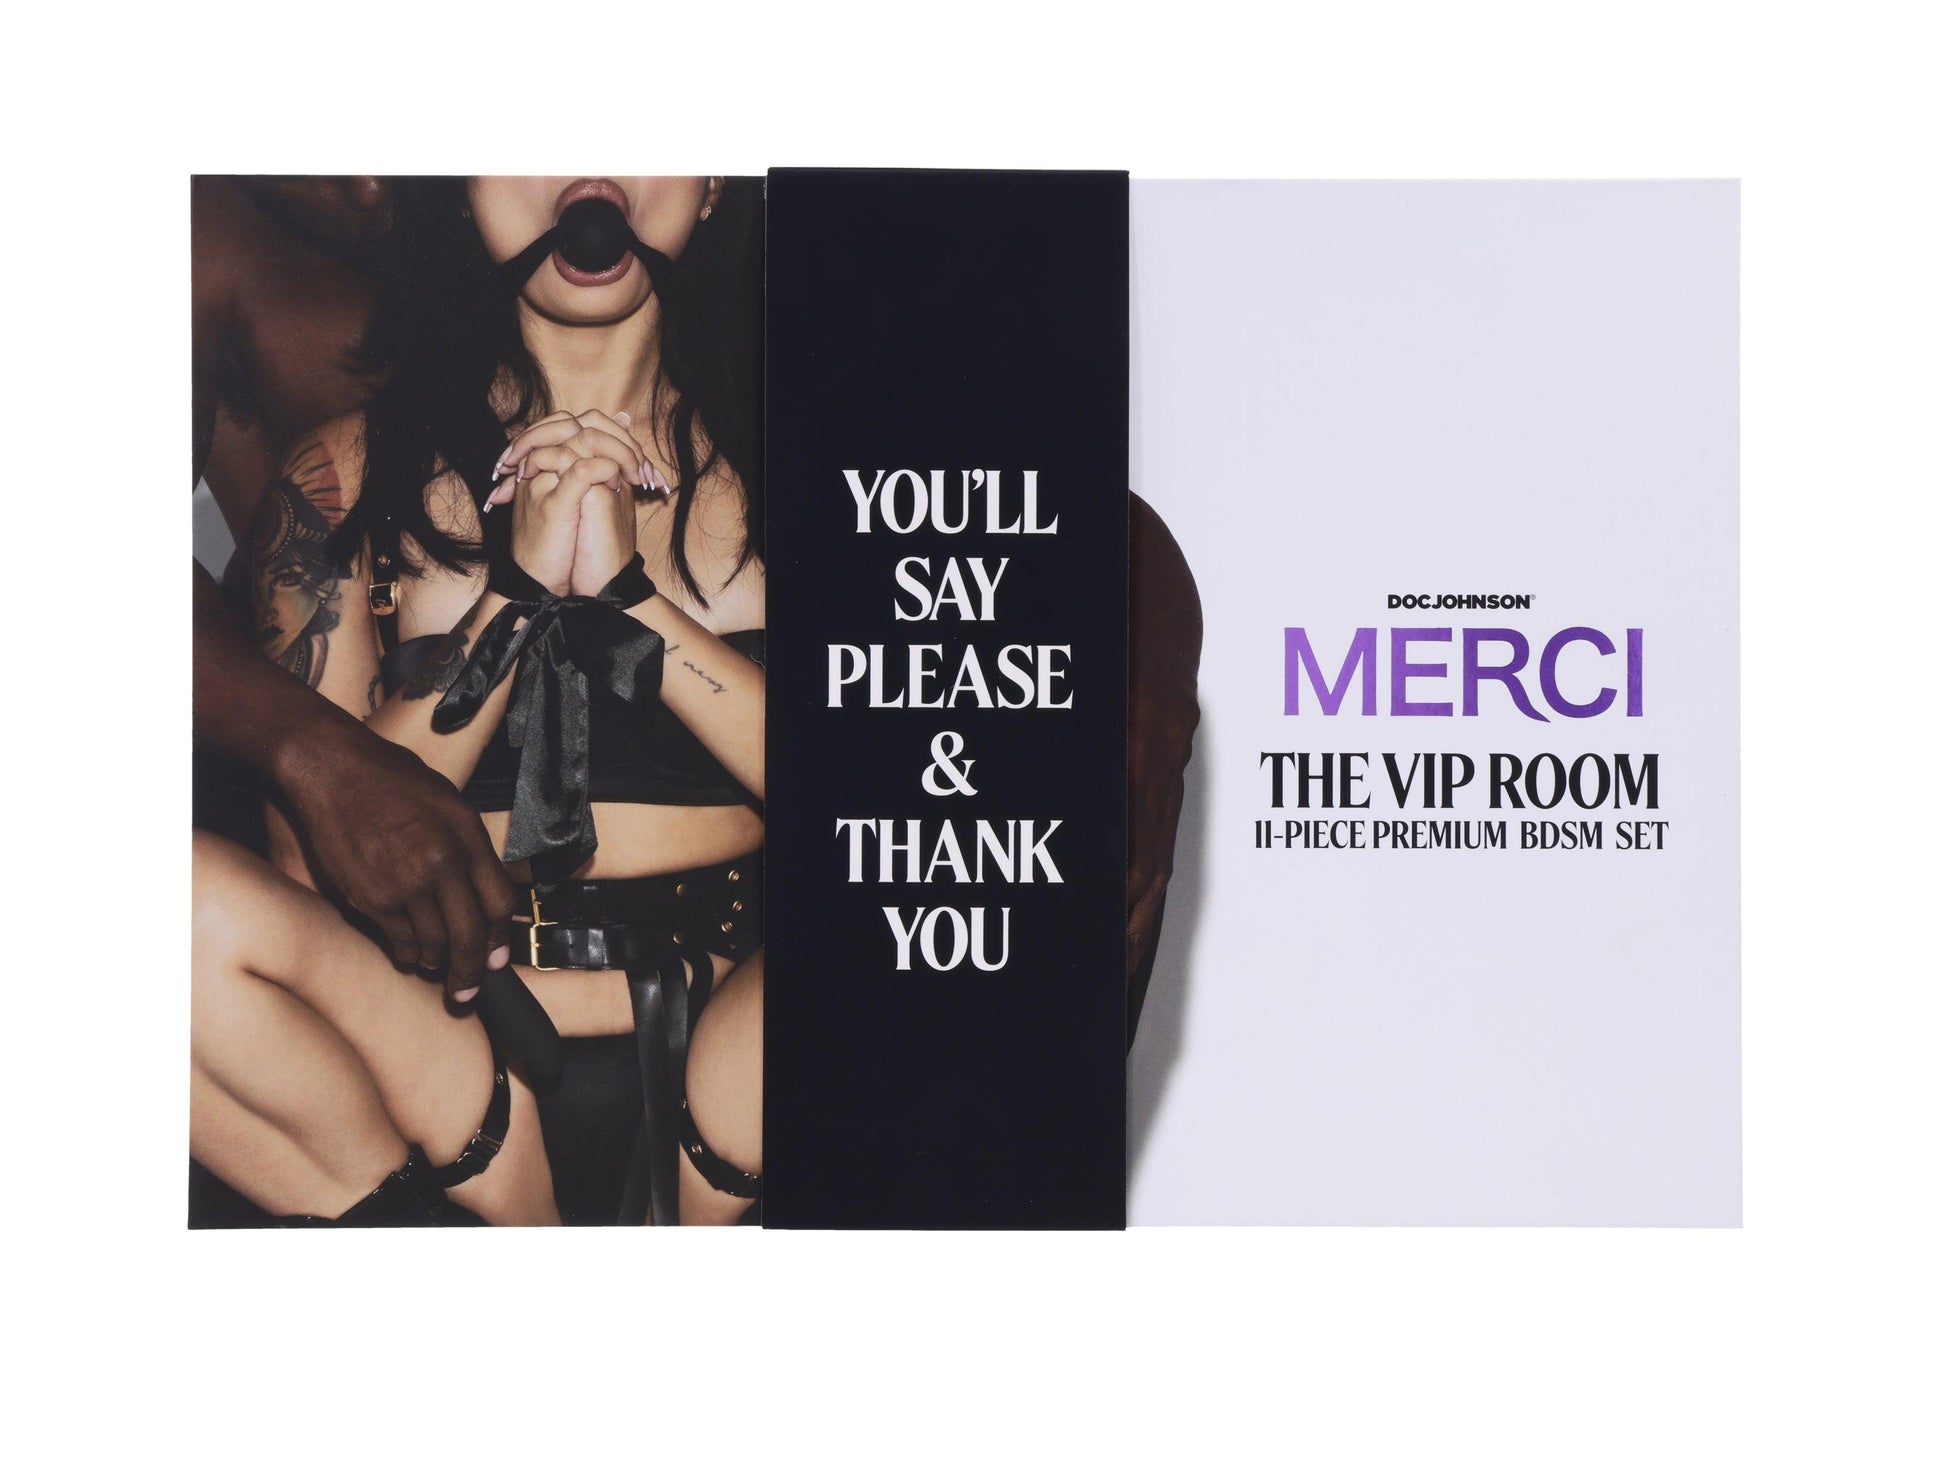 Merci - the Vip Room - BDSM Premium Set - Black - My Sex Toy Hub